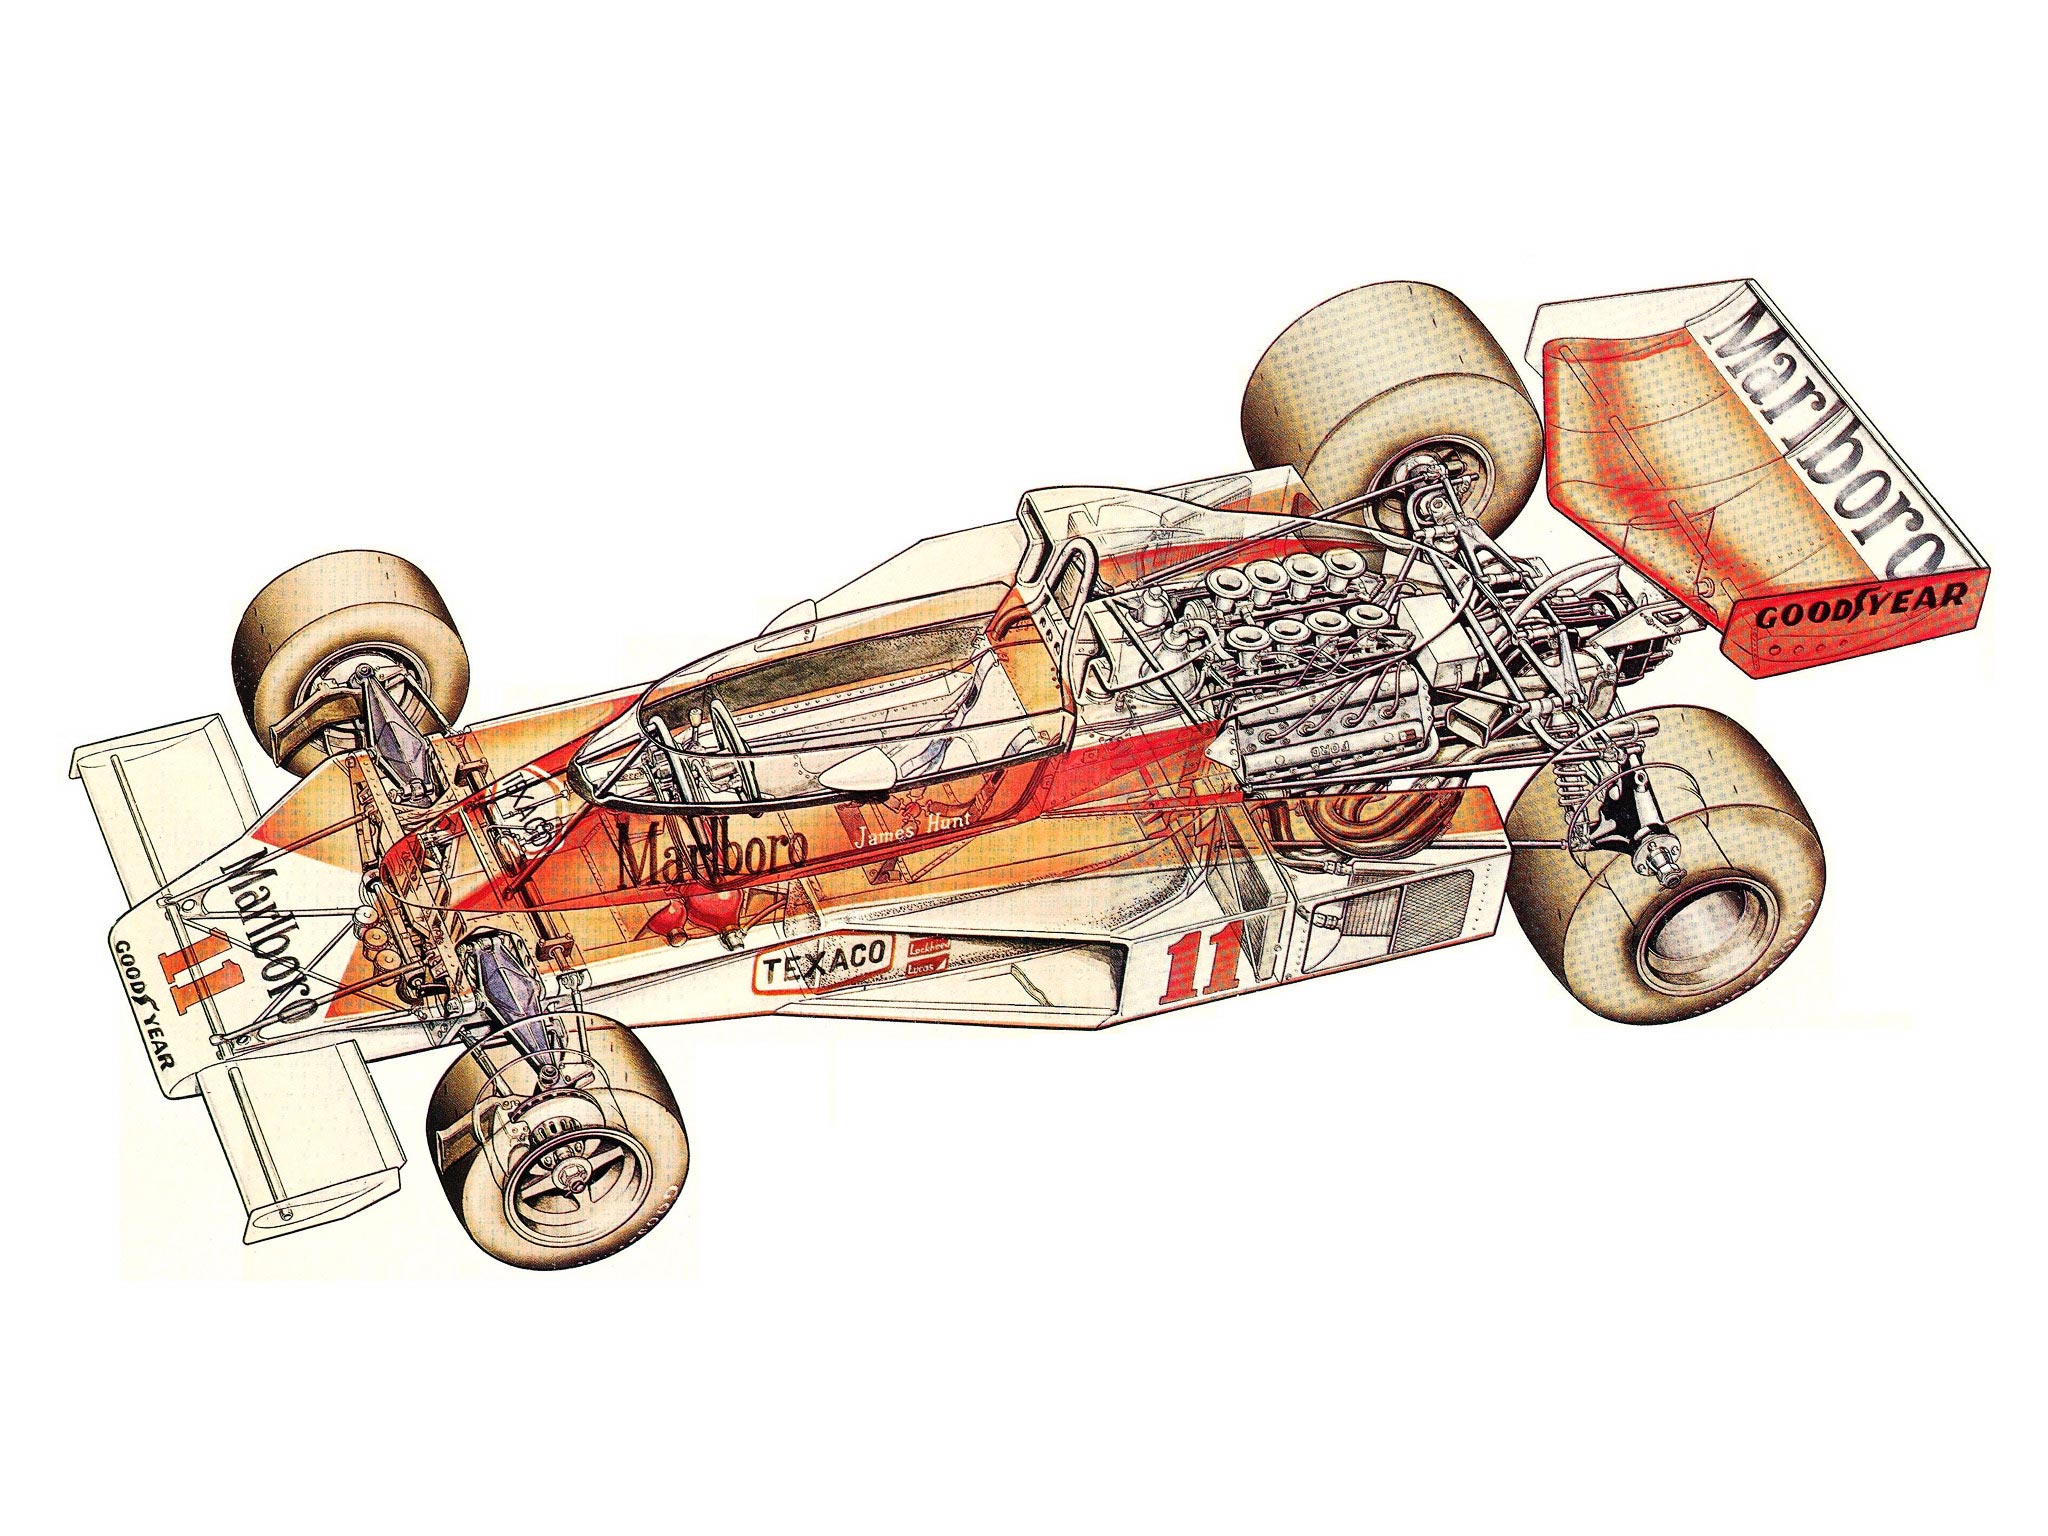 McLaren M23 cutaway drawing